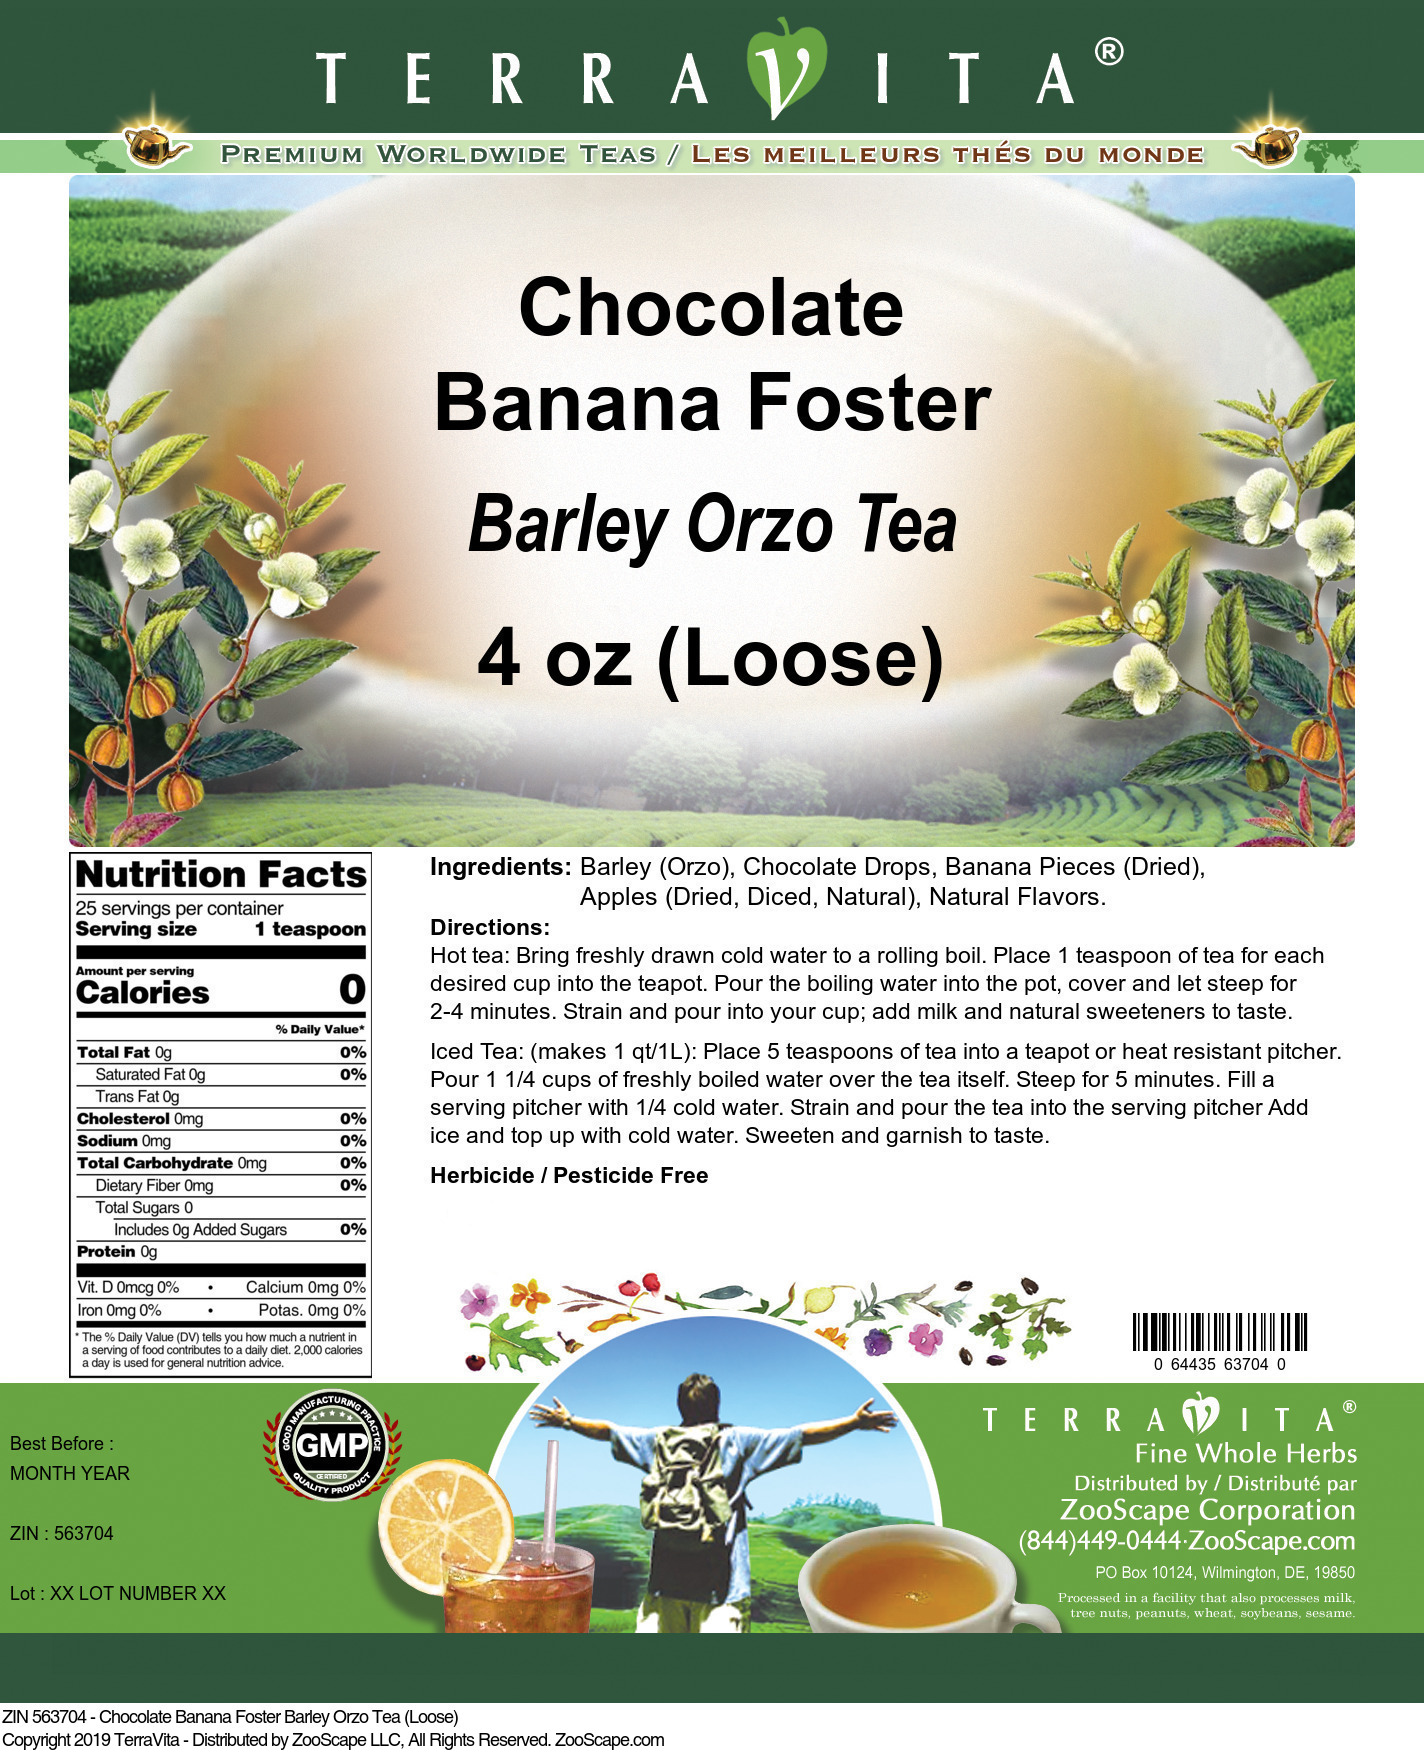 Chocolate Banana Foster Barley Orzo Tea (Loose) - Label